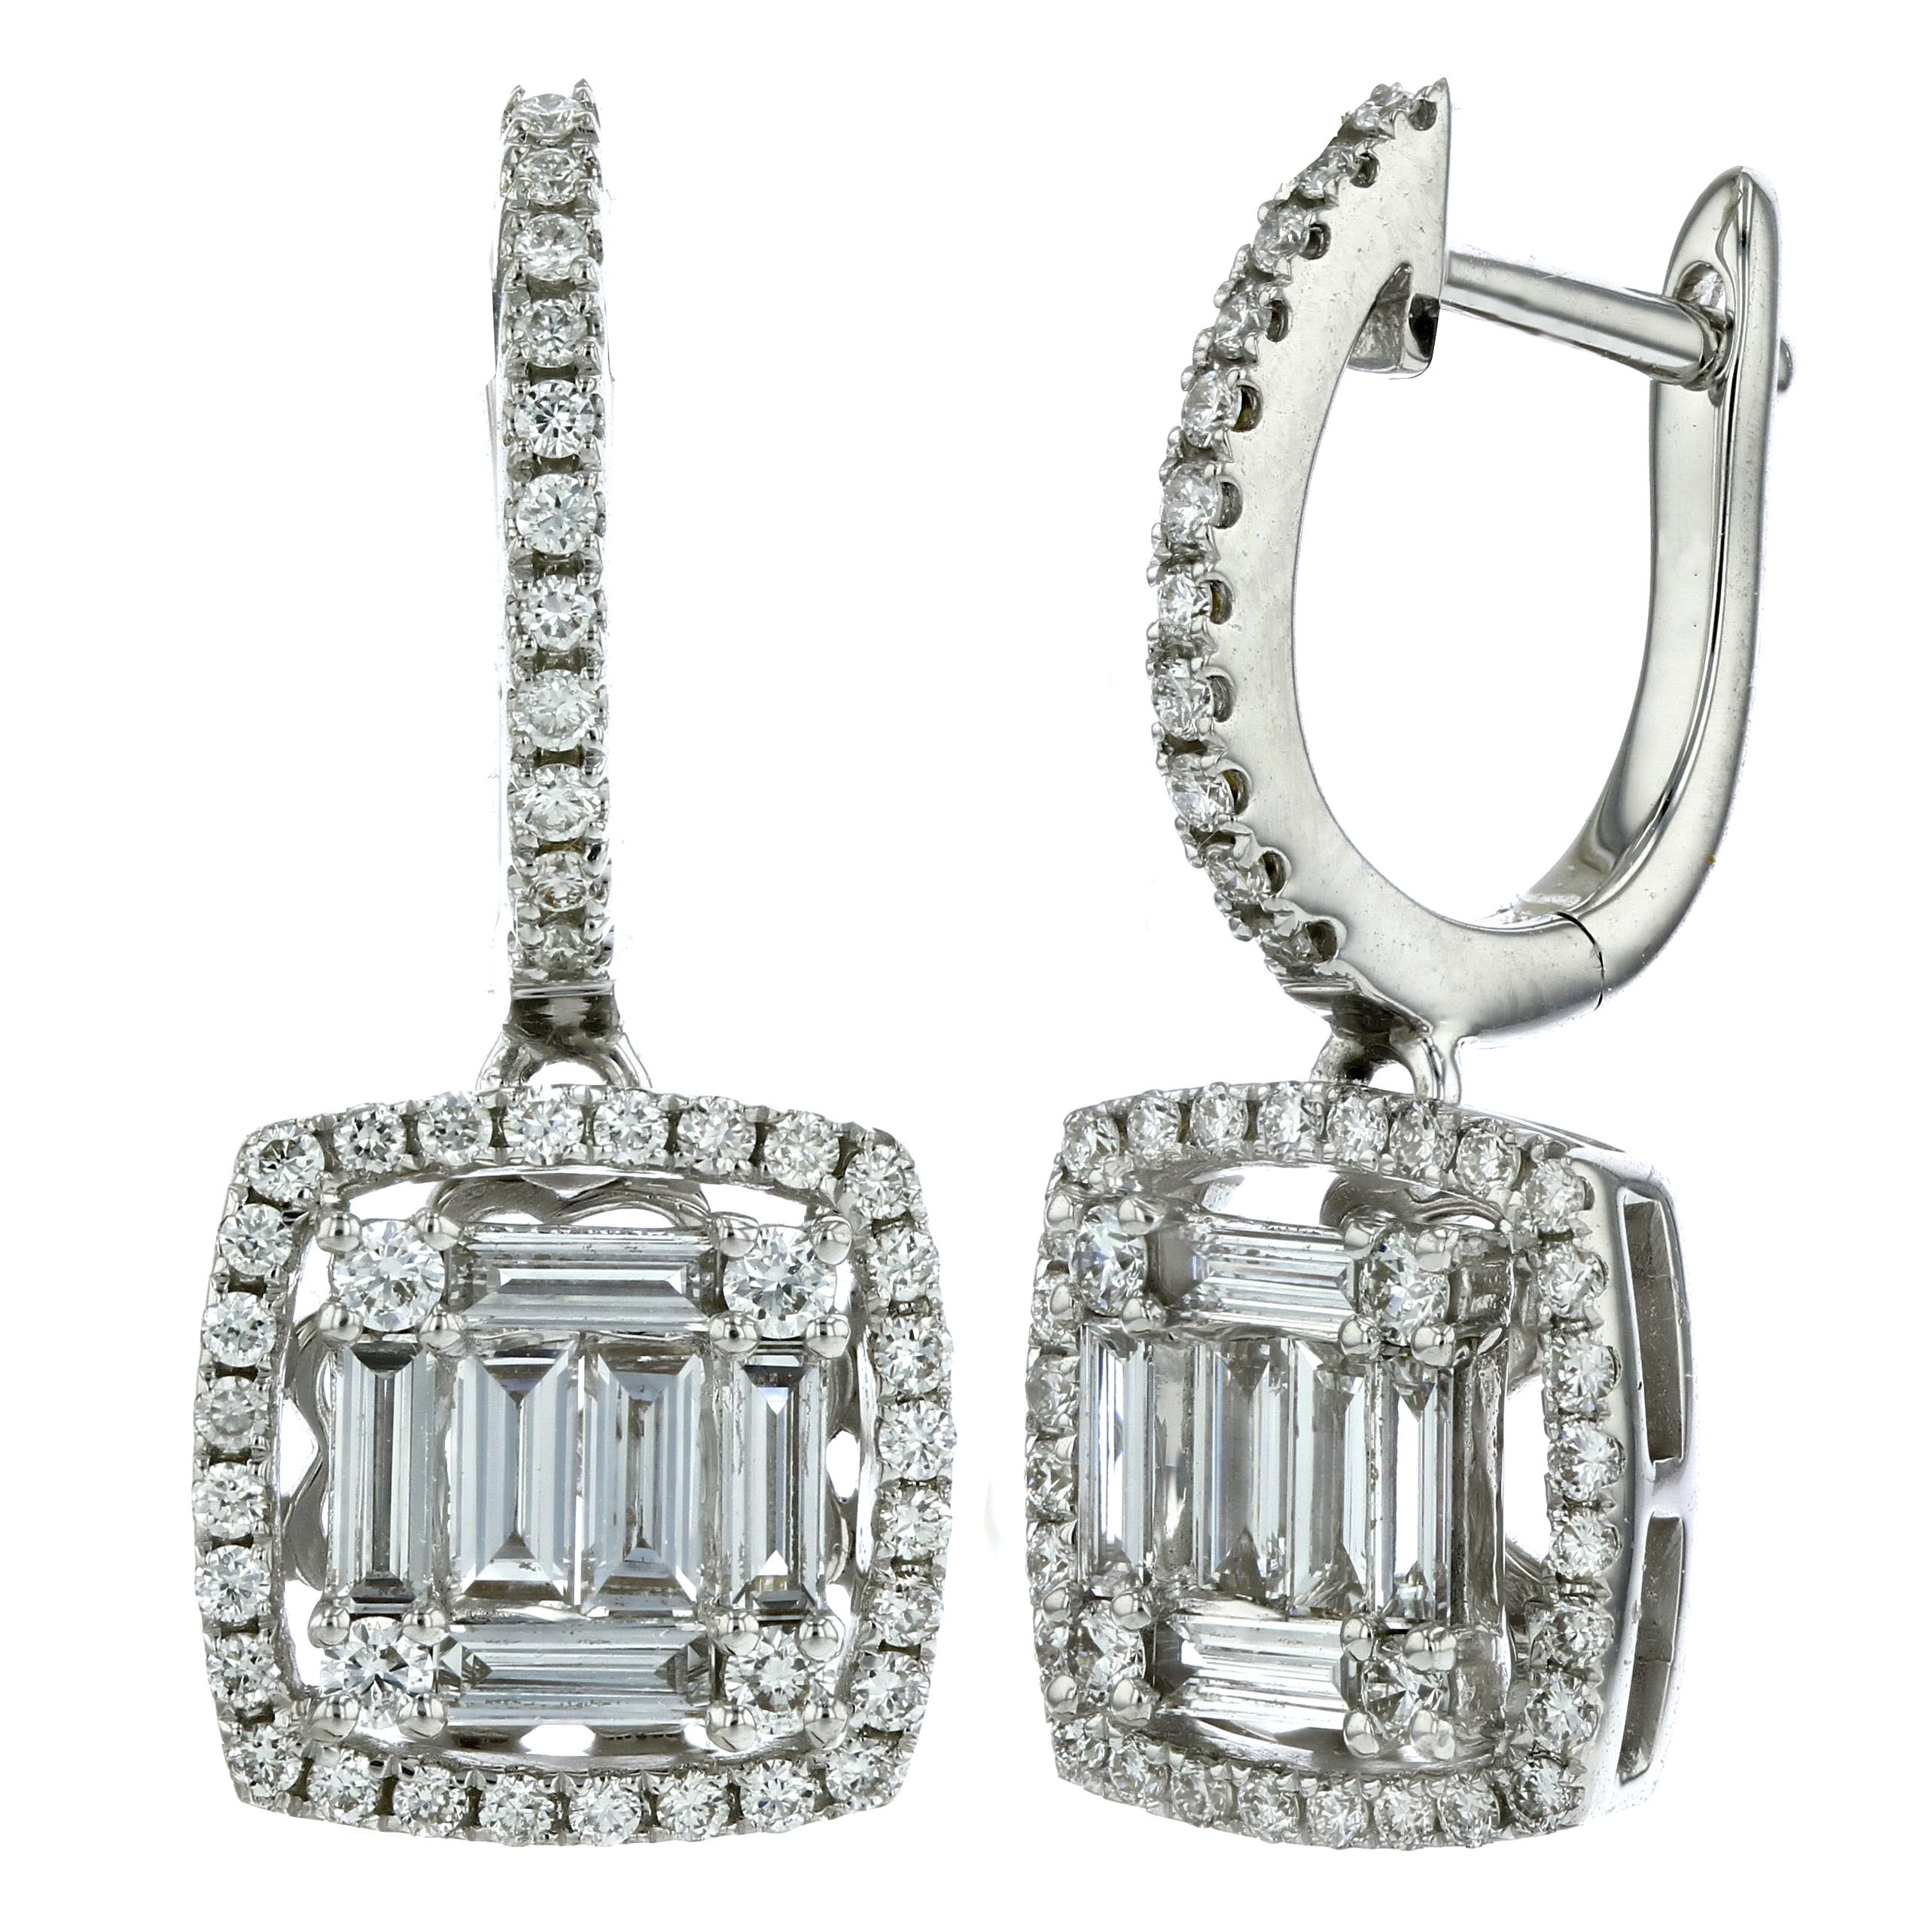 View 1.02ctw Diamond Cluster Dangling Earrings in 18k White Gold